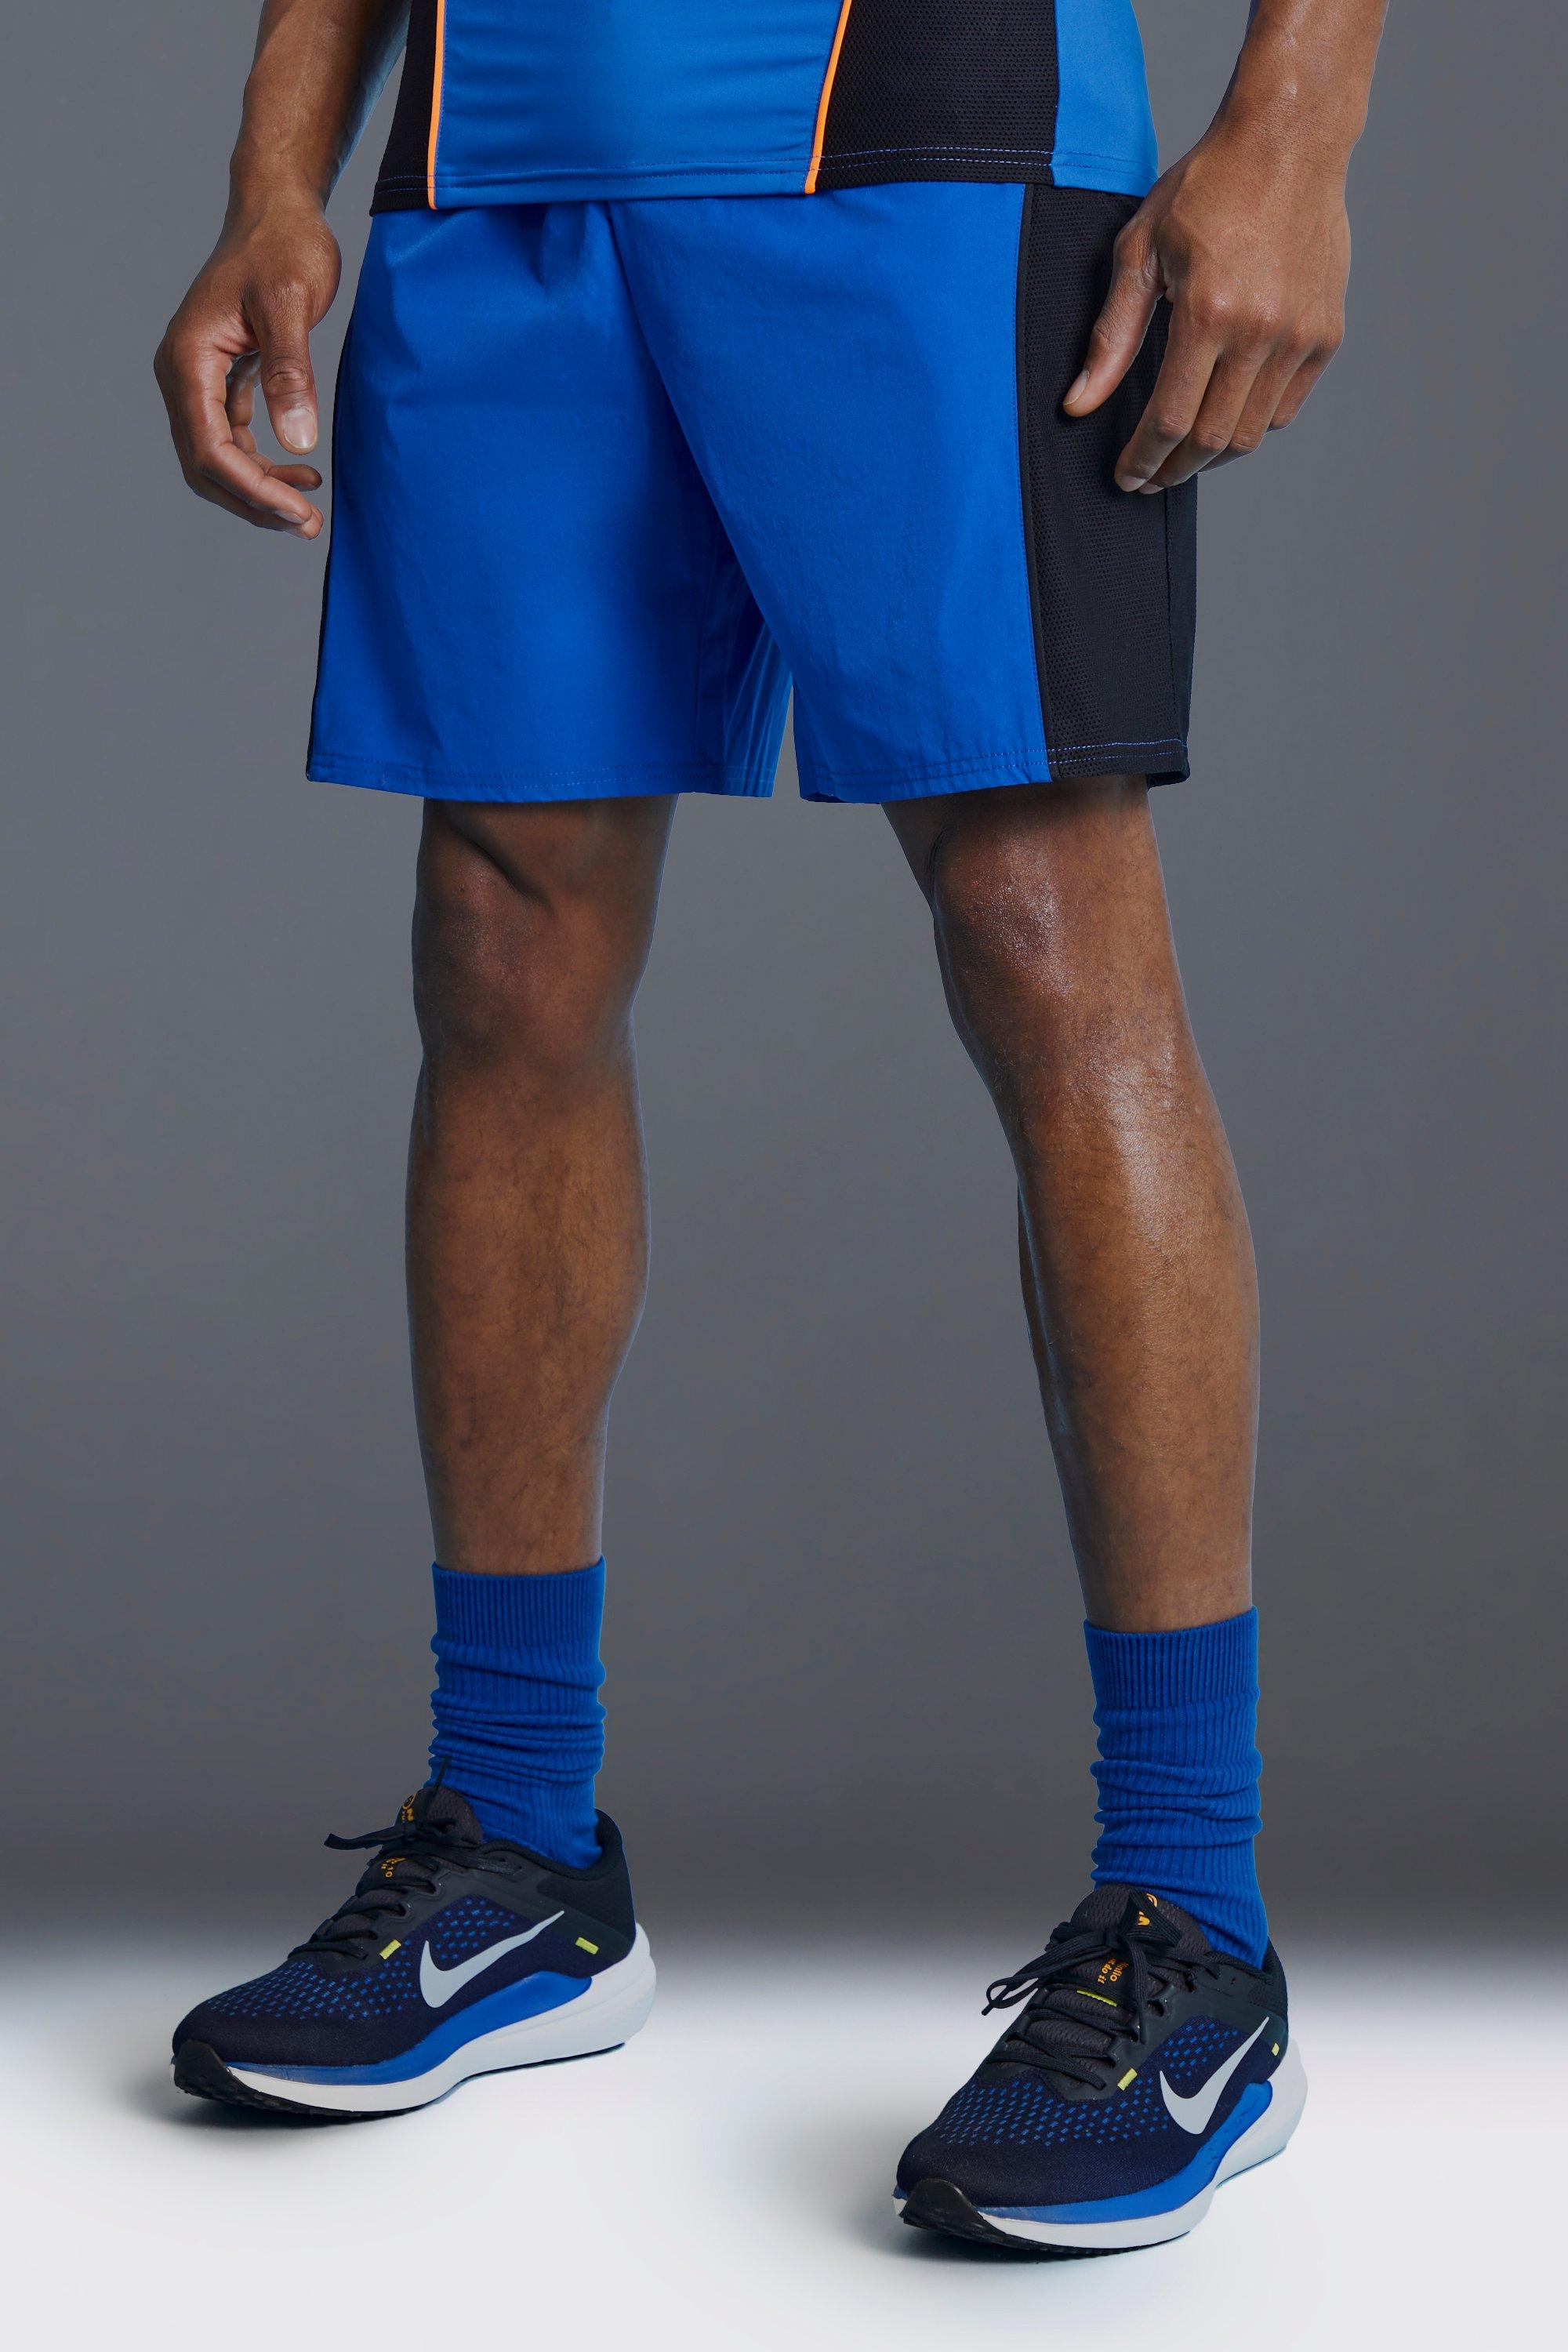 BOOMLEMON Men's Basketball Shorts Gym Training Workout Athletic Shorts Mesh  Graphic Print Running Short Pants(Christmas Black XS) : :  Clothing, Shoes & Accessories